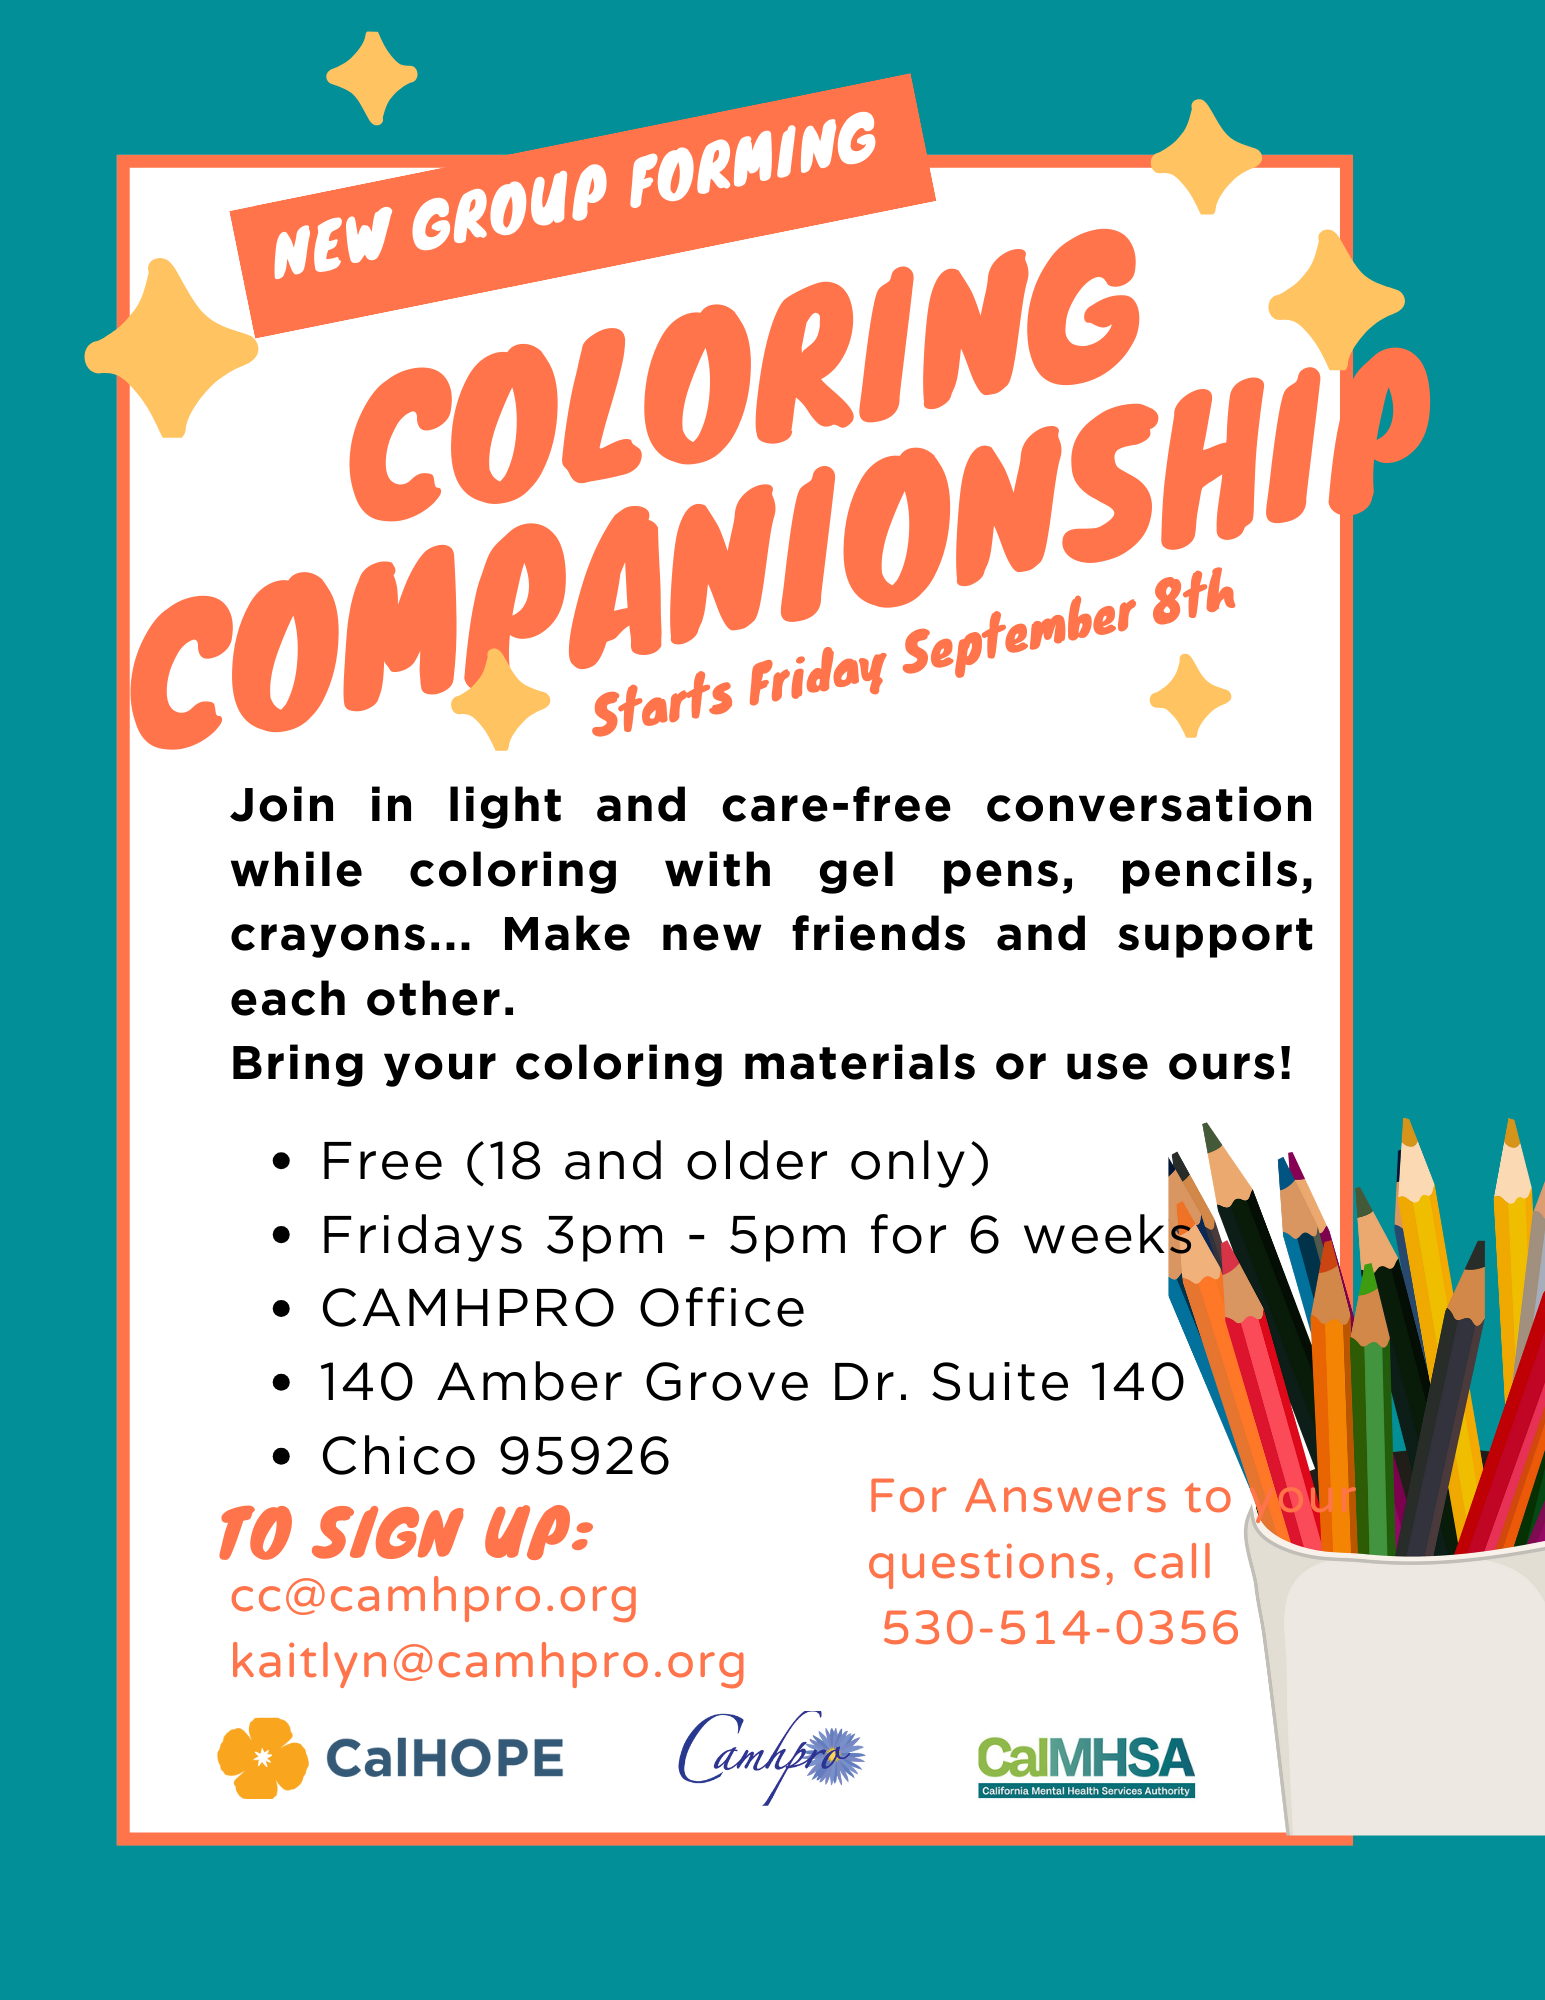 Coloring Companionship | CAMHPRO